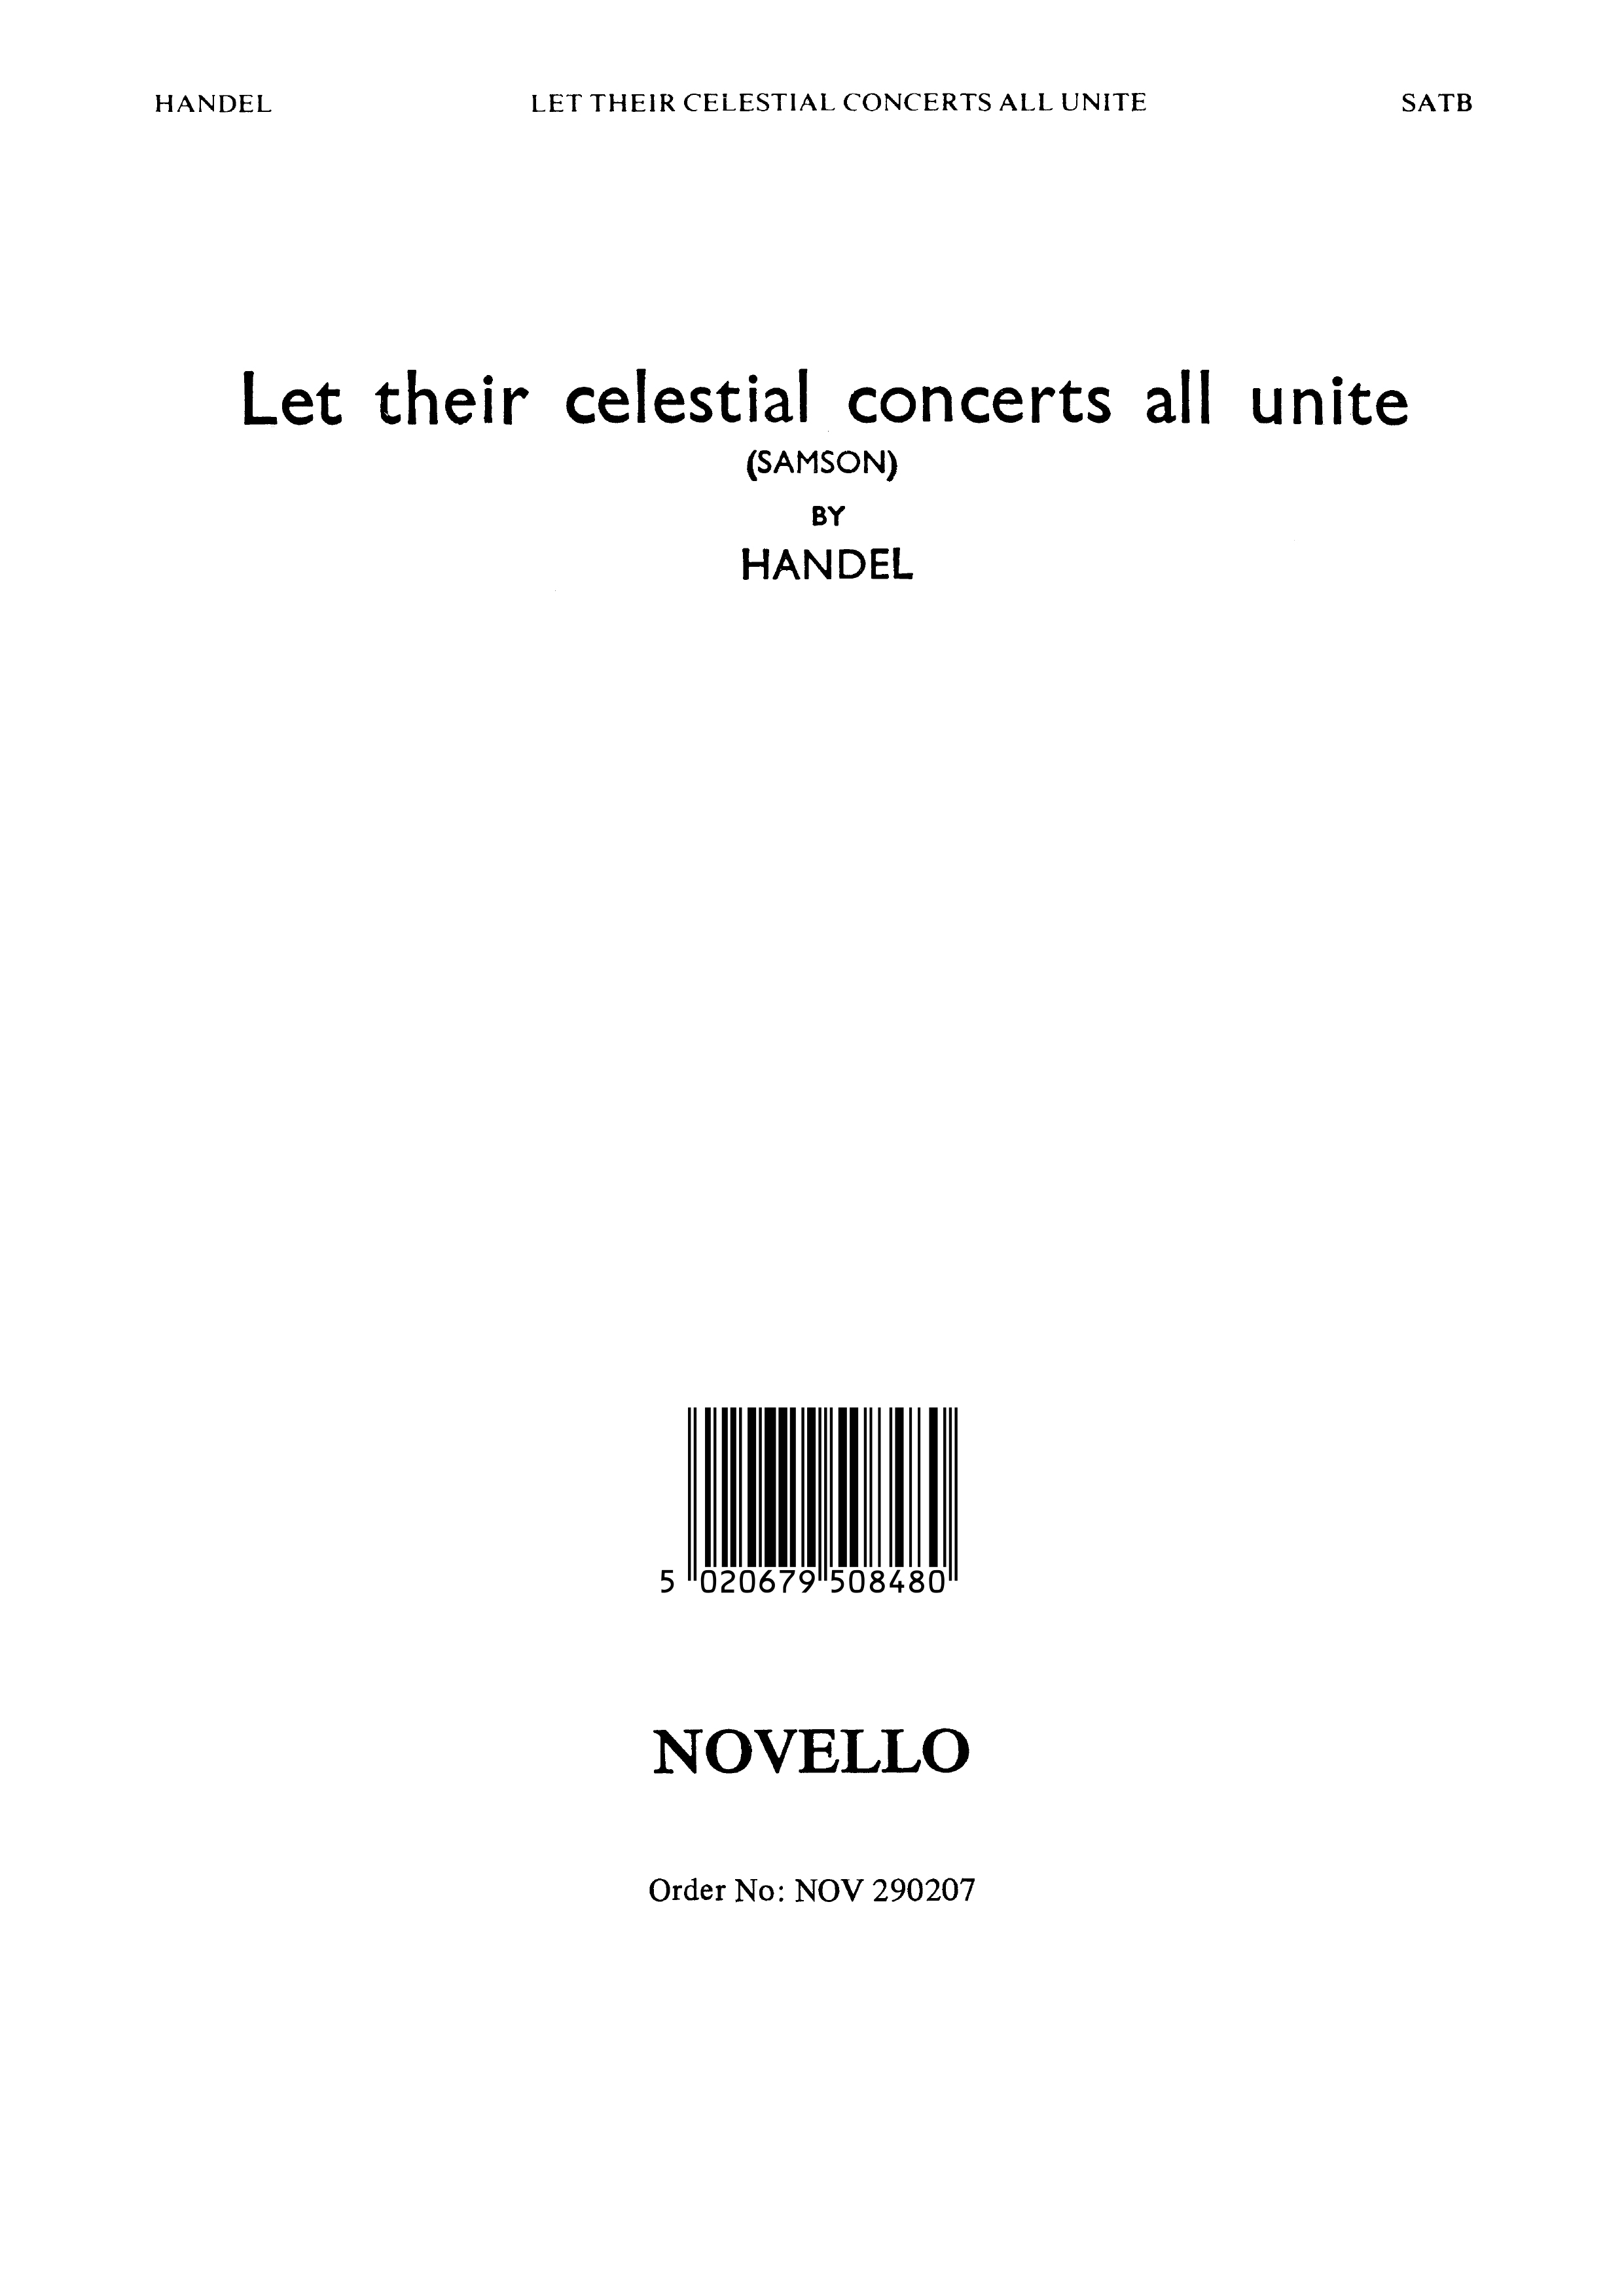 Georg Friedrich Hndel: Let Their Celestial Concerts (Samson): SATB: Vocal Score